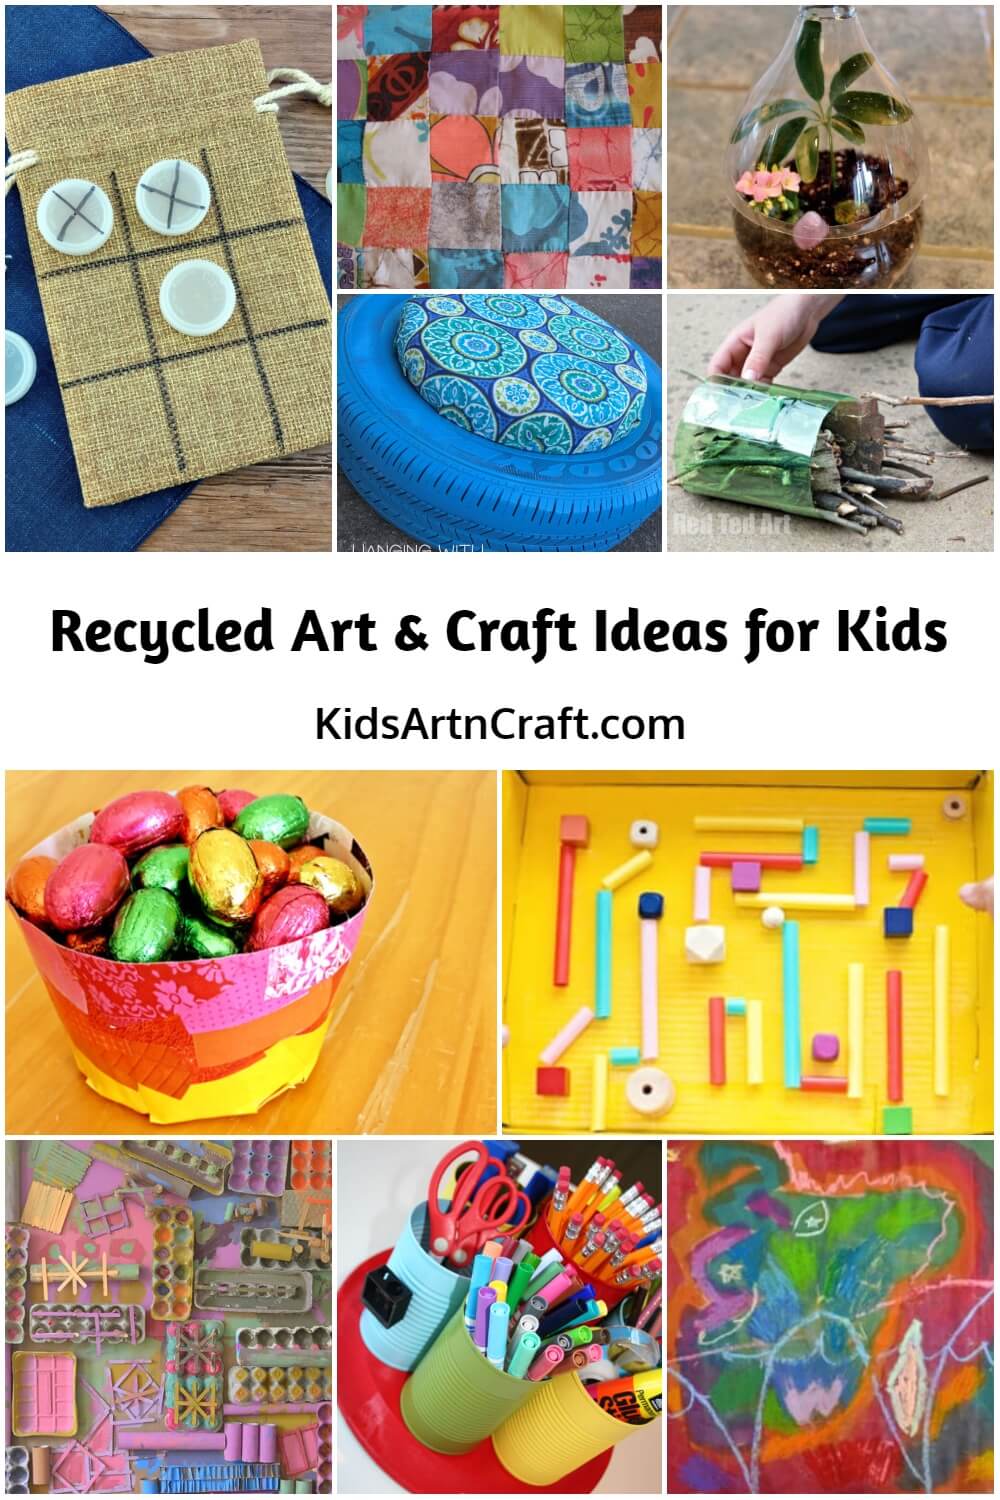 Recycled Art & Craft Ideas for Kids - Kids Art & Craft